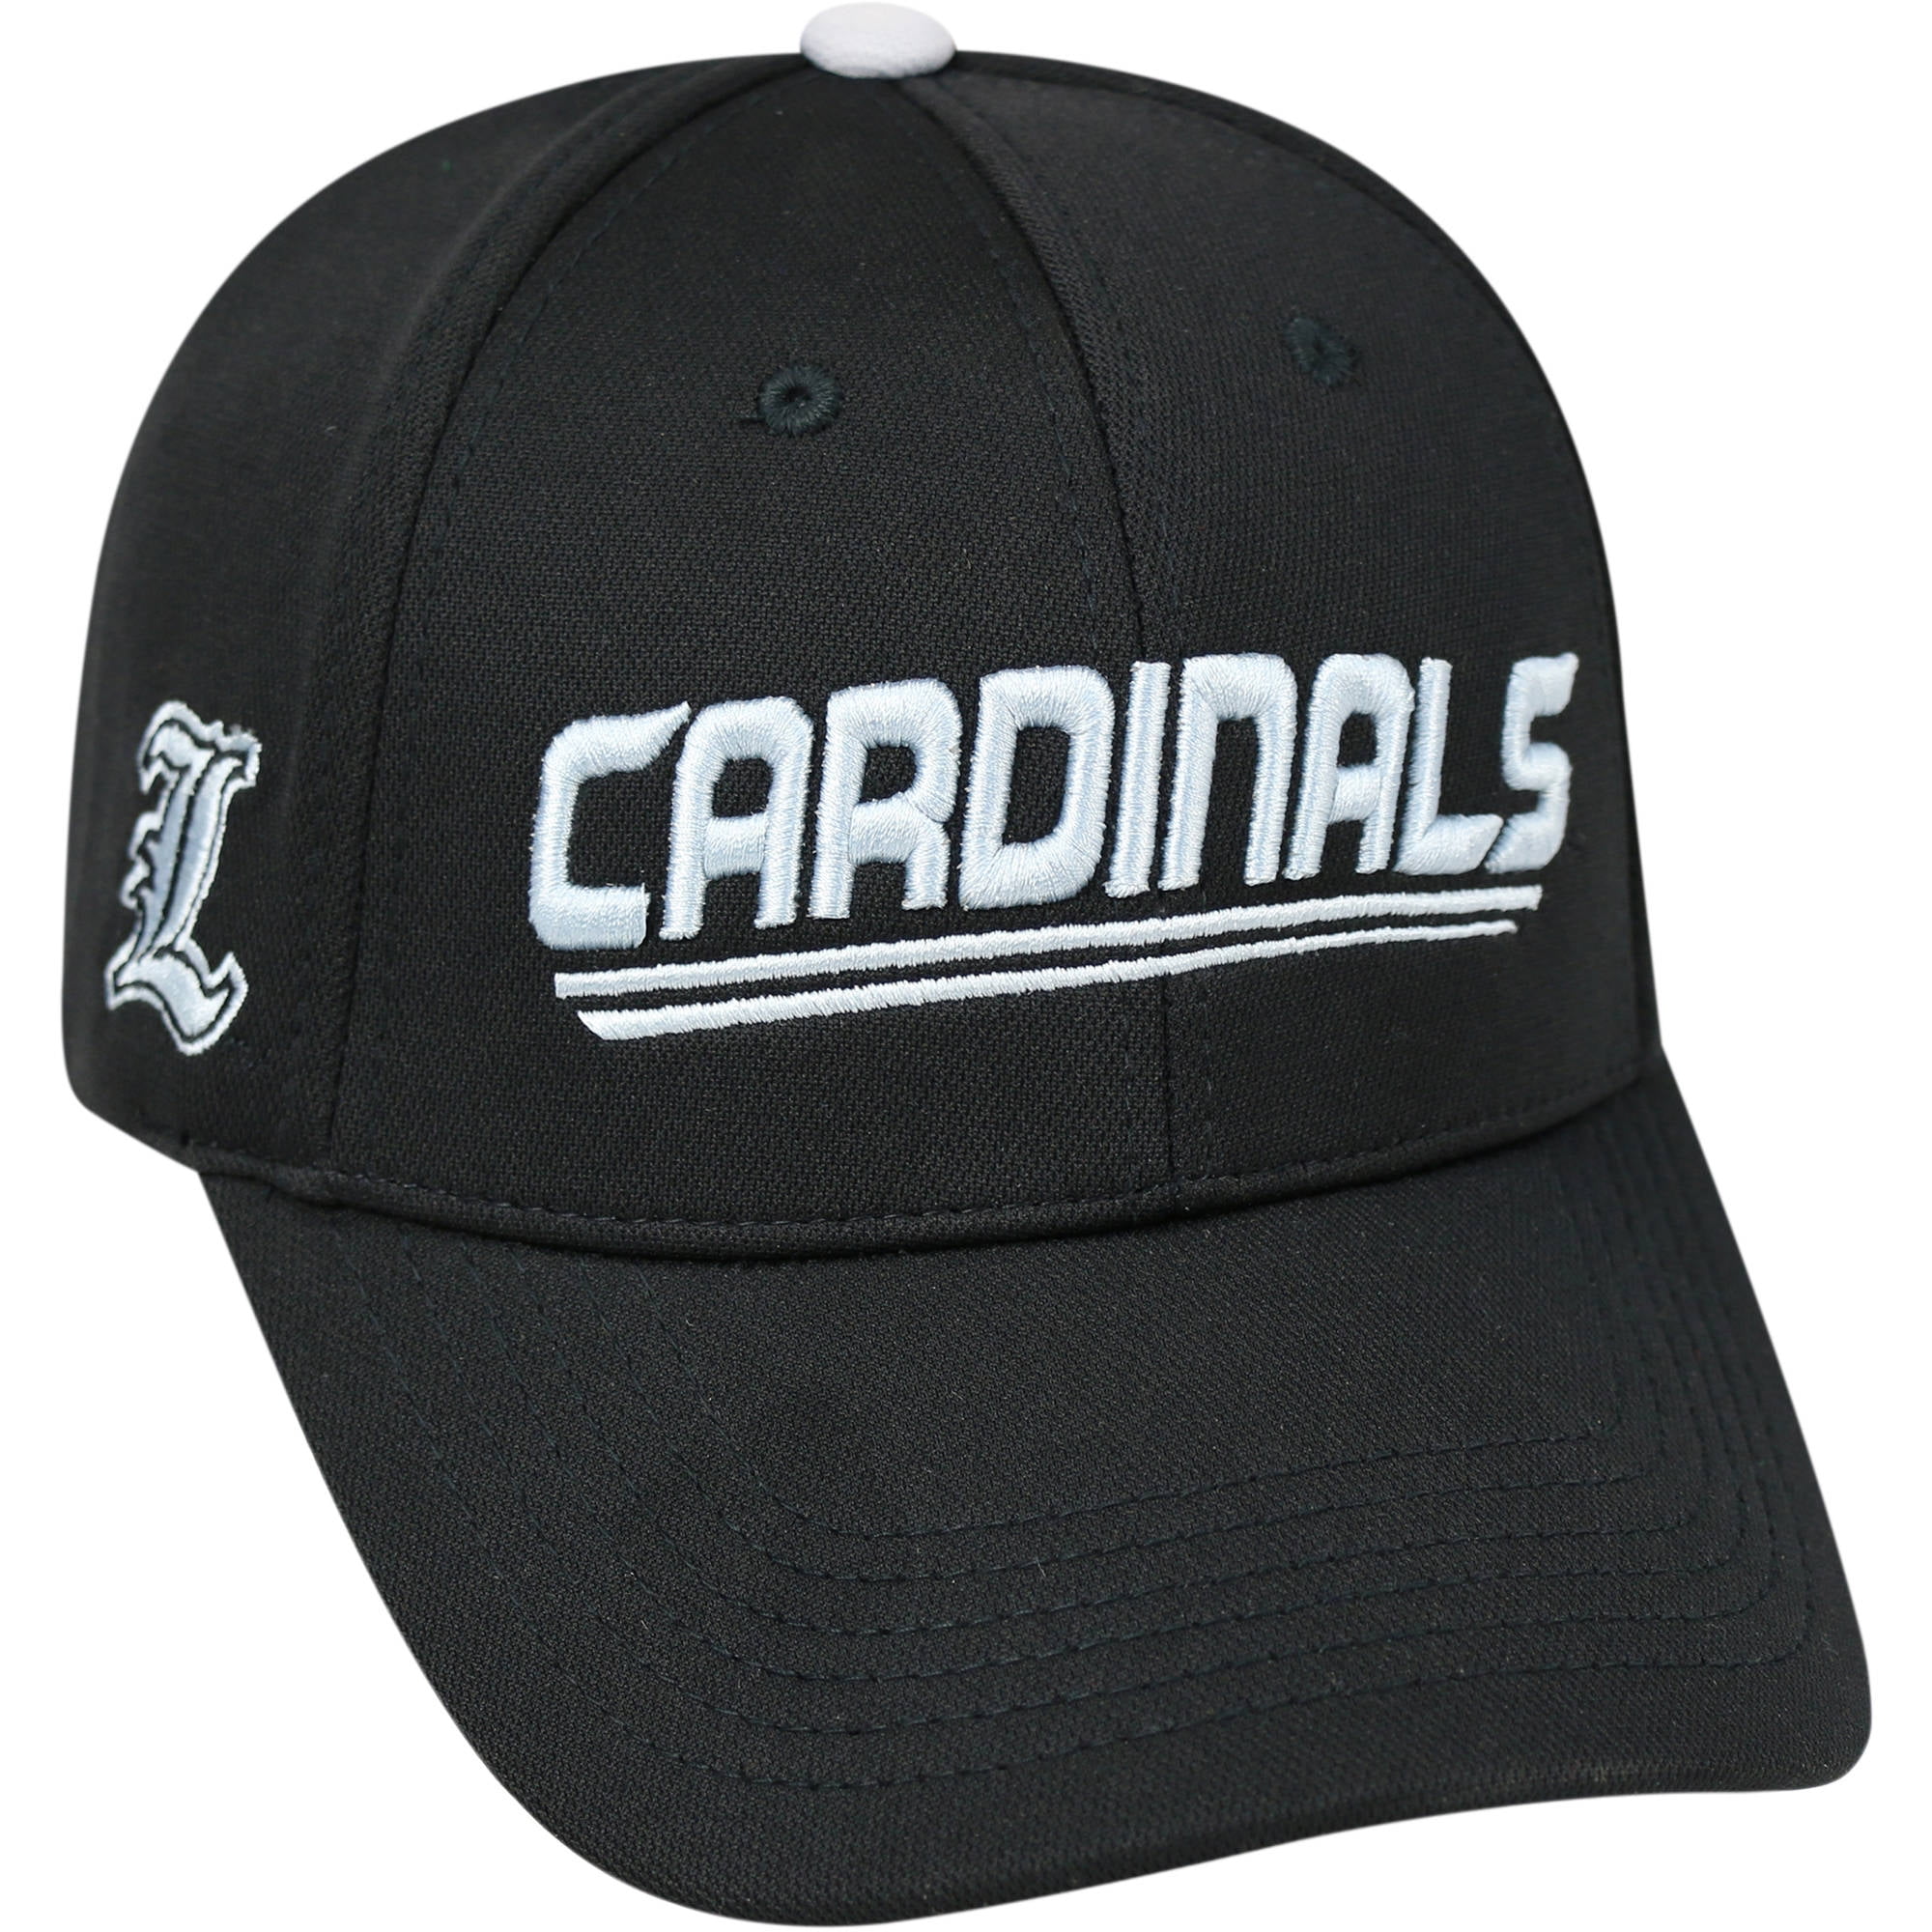 Louisville university Baseball hat